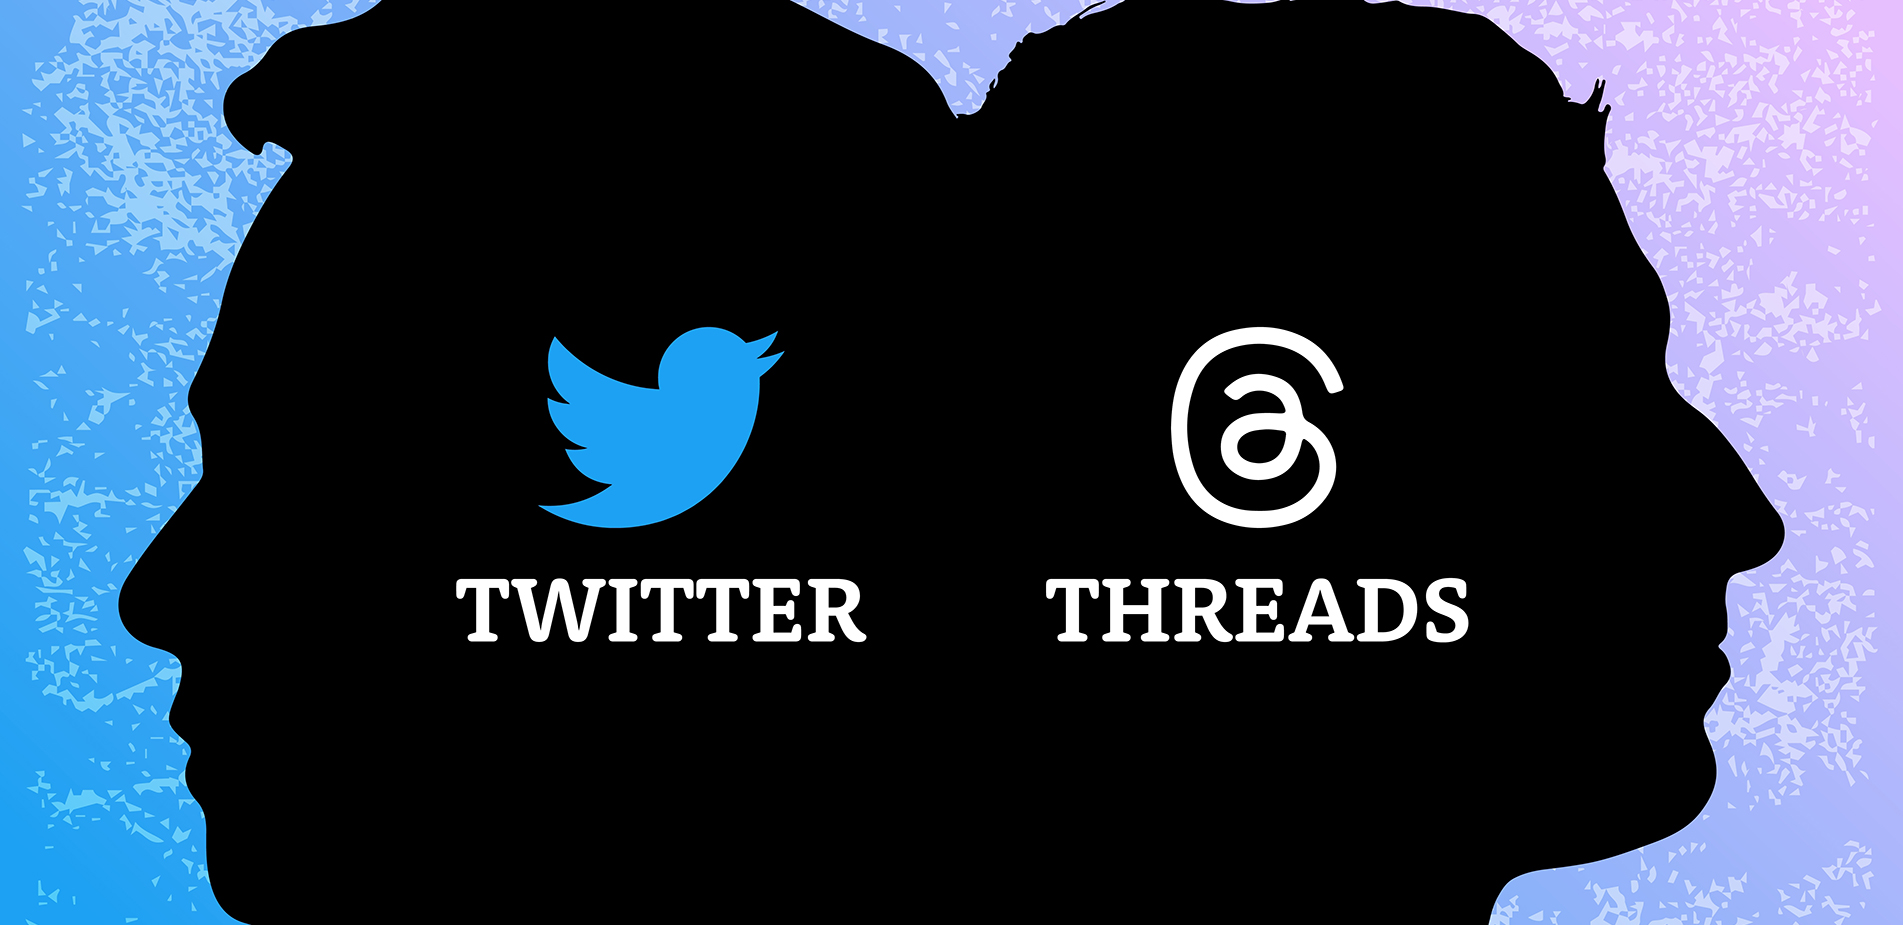 Threads εναντίον Twitter: Αυτή είναι η πραγματική μάχη Μασκ και Ζάκερμπεργκ για δισεκατομμύρια δολάρια και την κυριαρχία στα social media